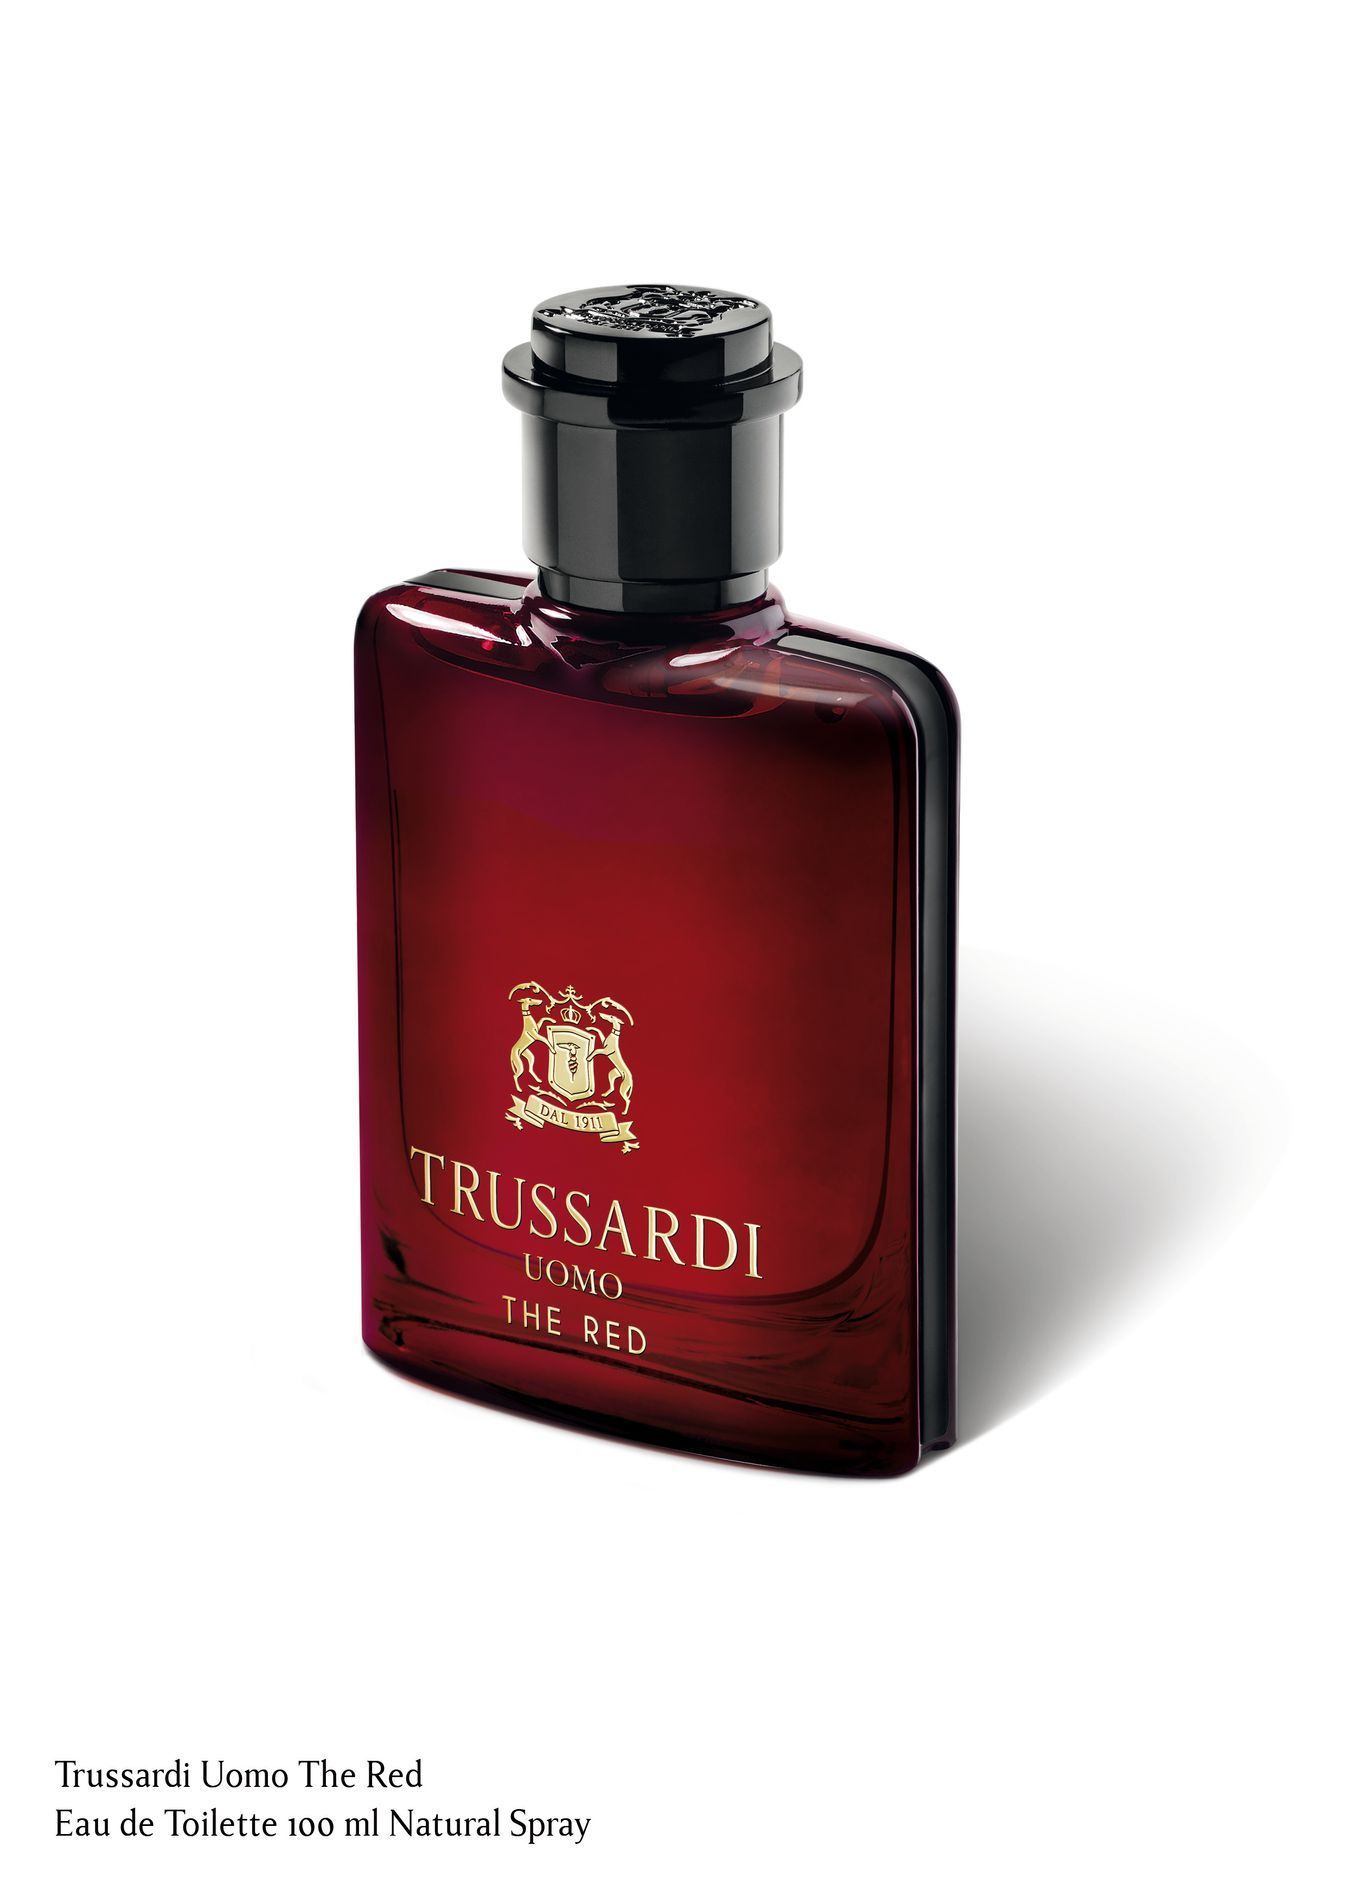 Trussardi: The Red